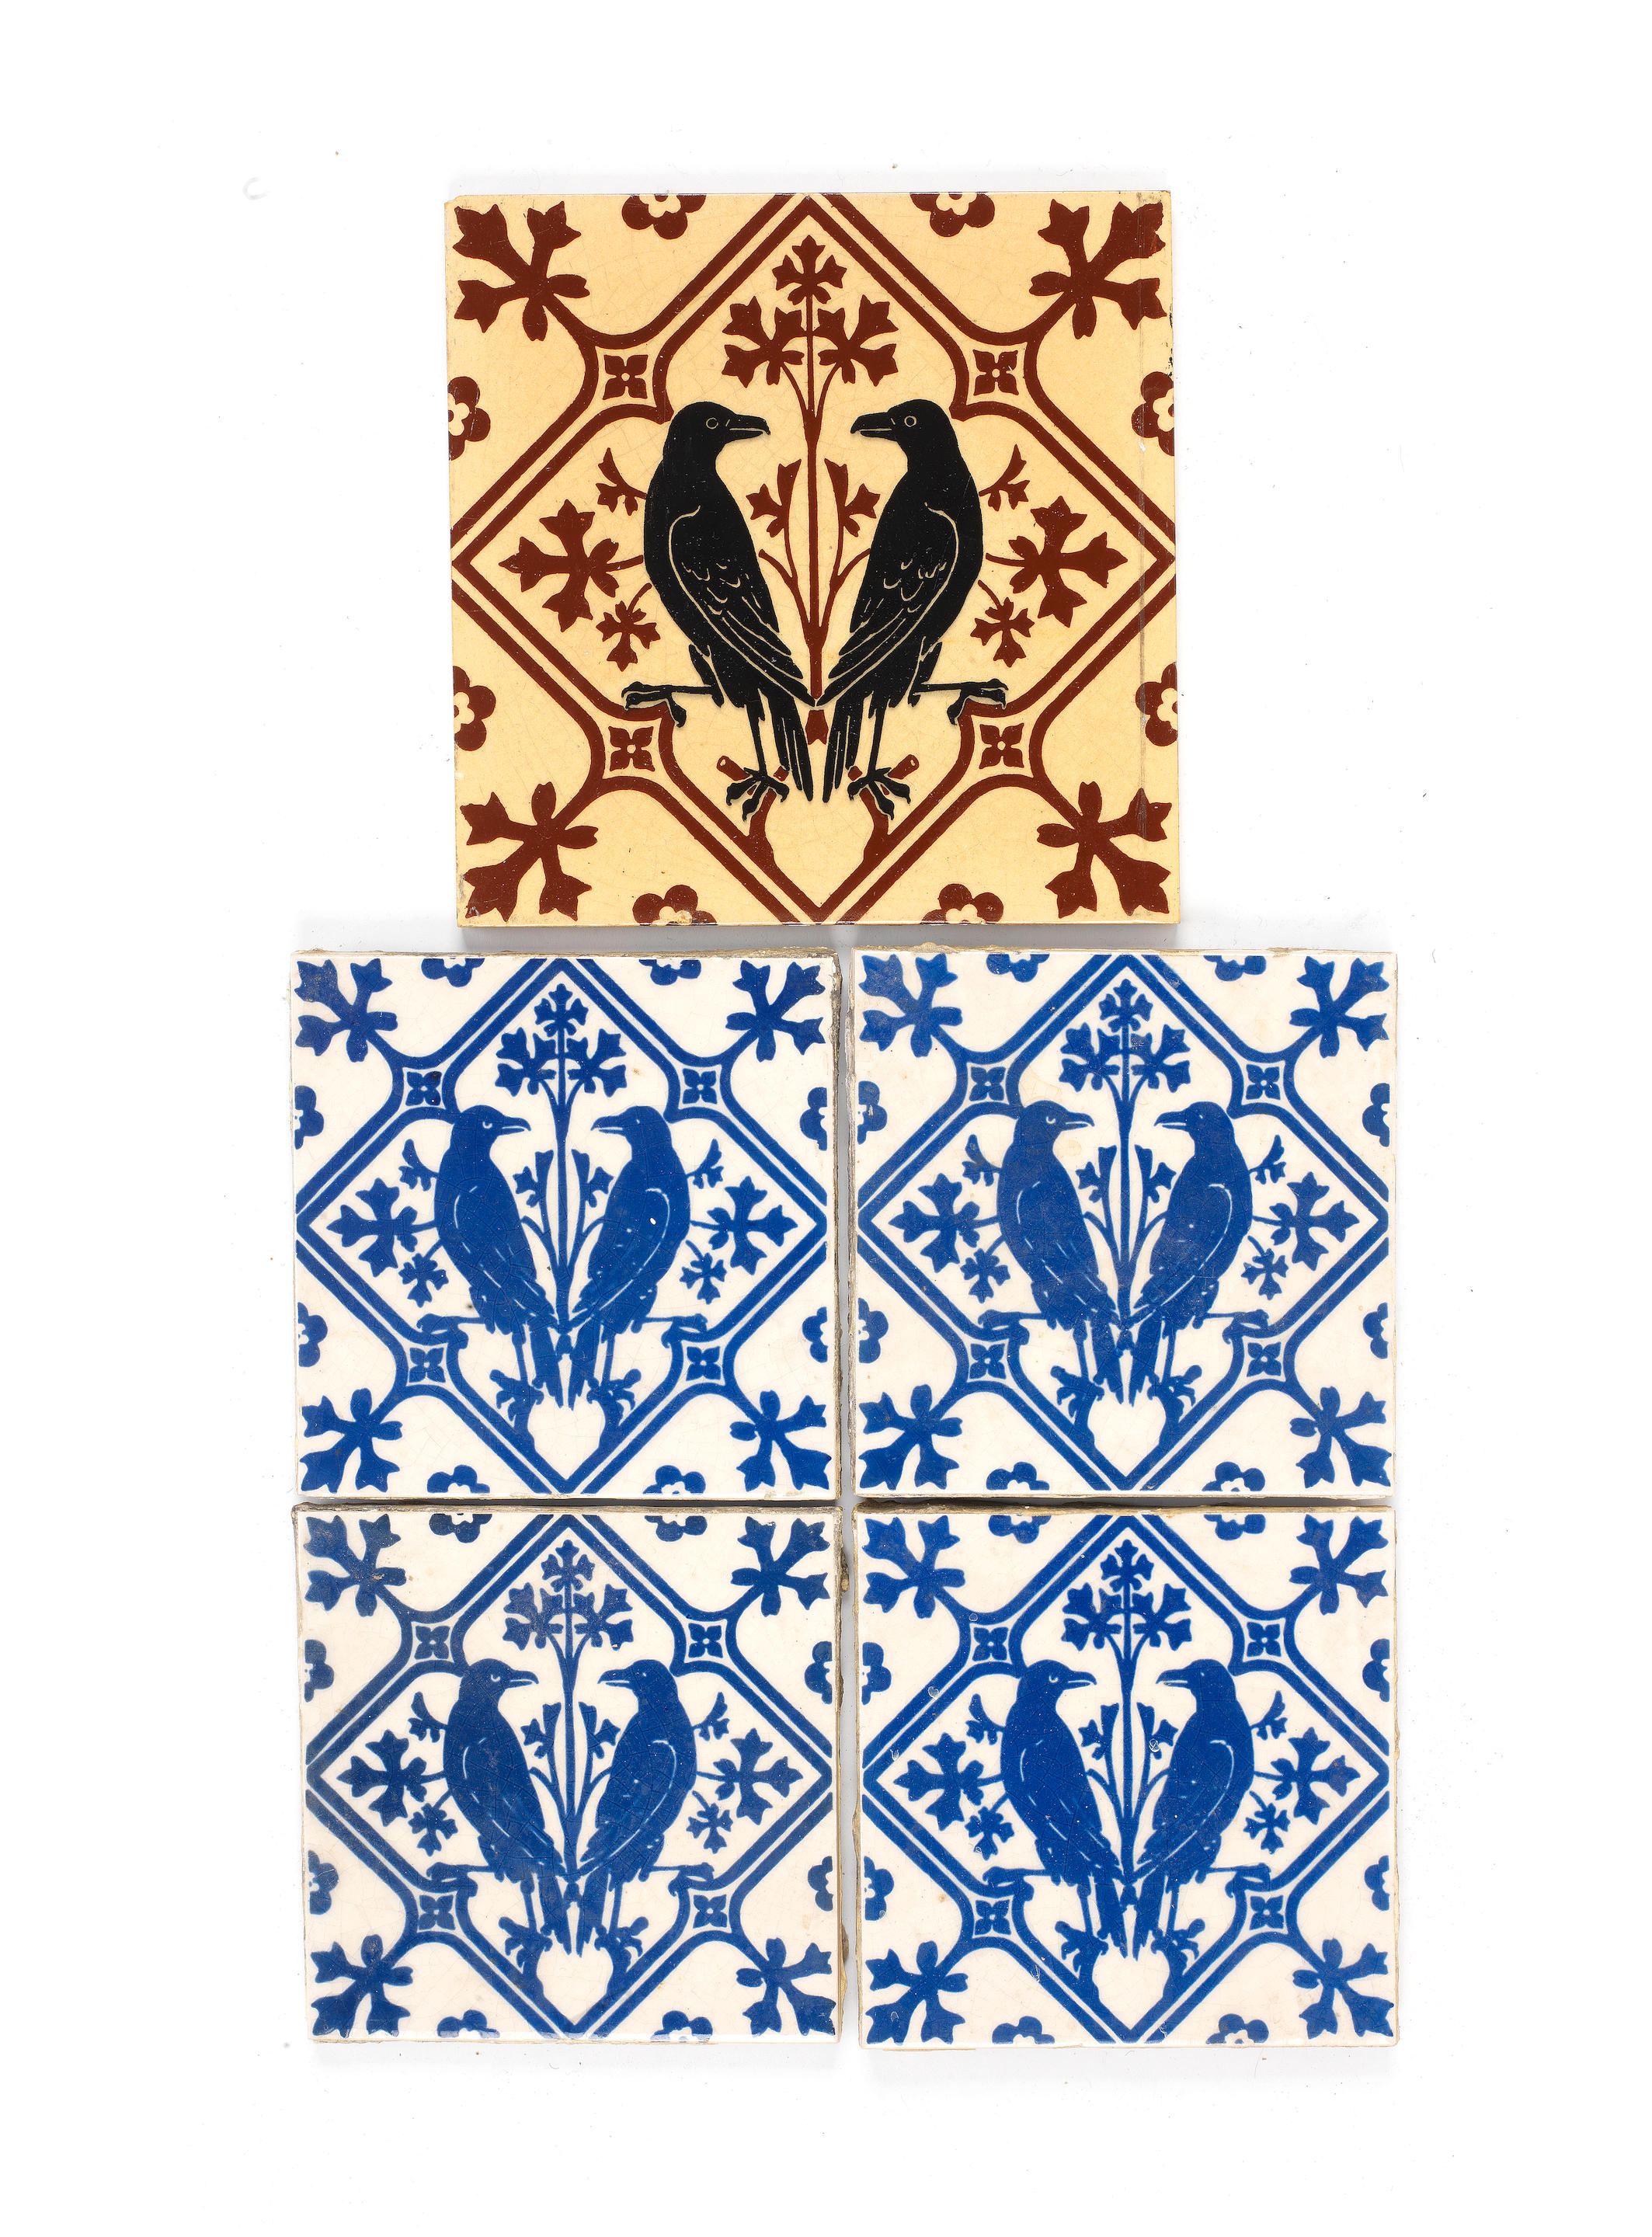 W Pugin Design N Details about   Original Victorian Minton Floor Tiles A 